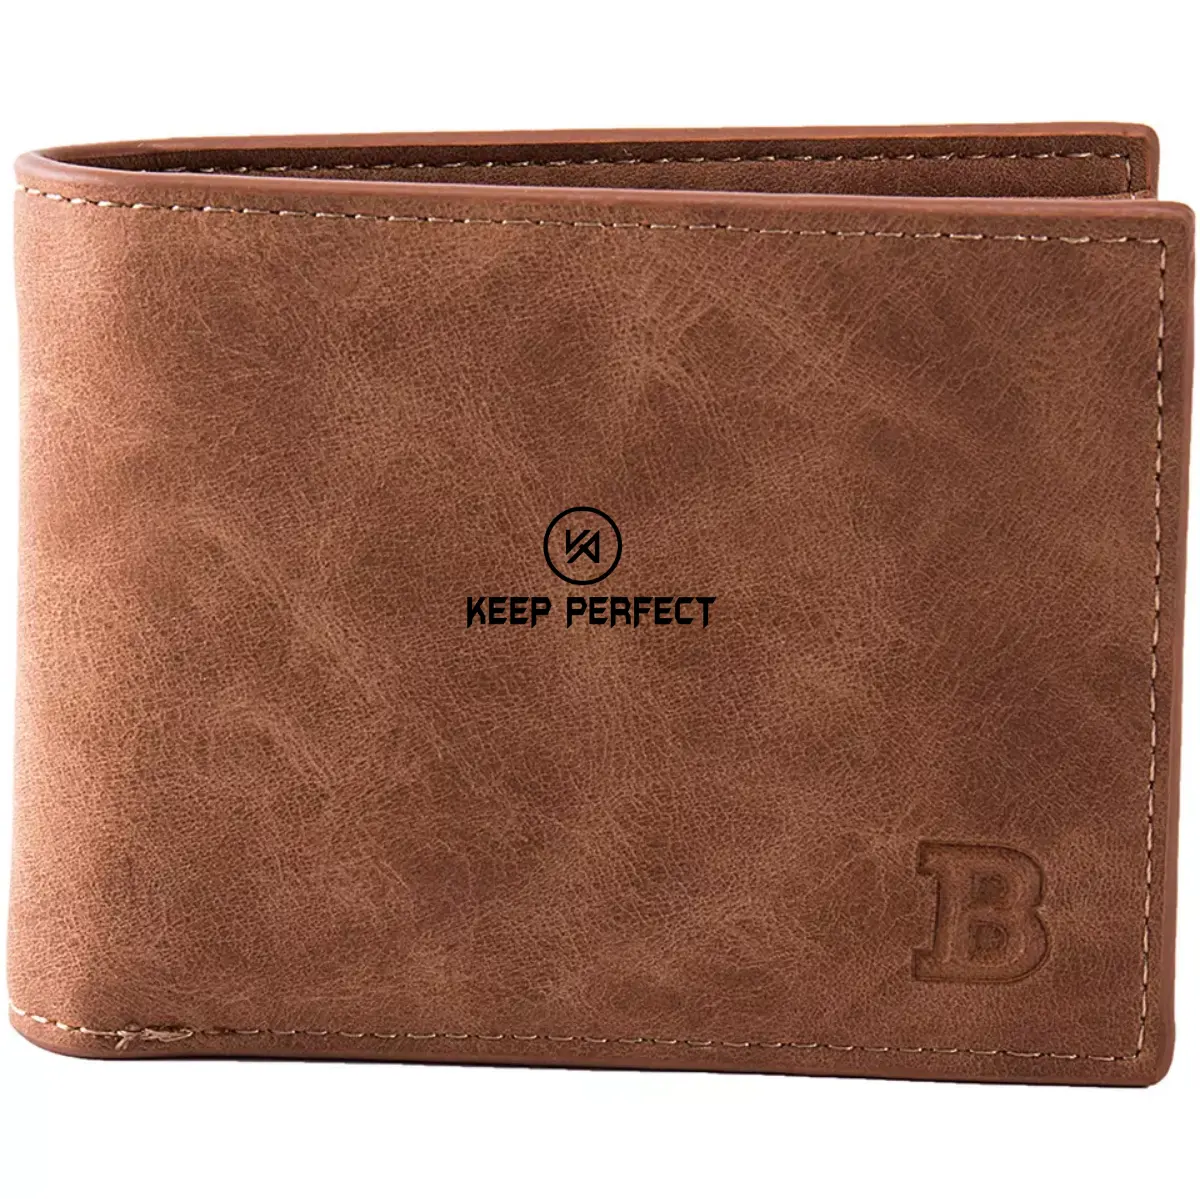 Portefeuille Carteira Personnaliser Design Slim Coin Purse Purse ID Credit Card Holder Short PU Leather RFID Thin Wallet For Men